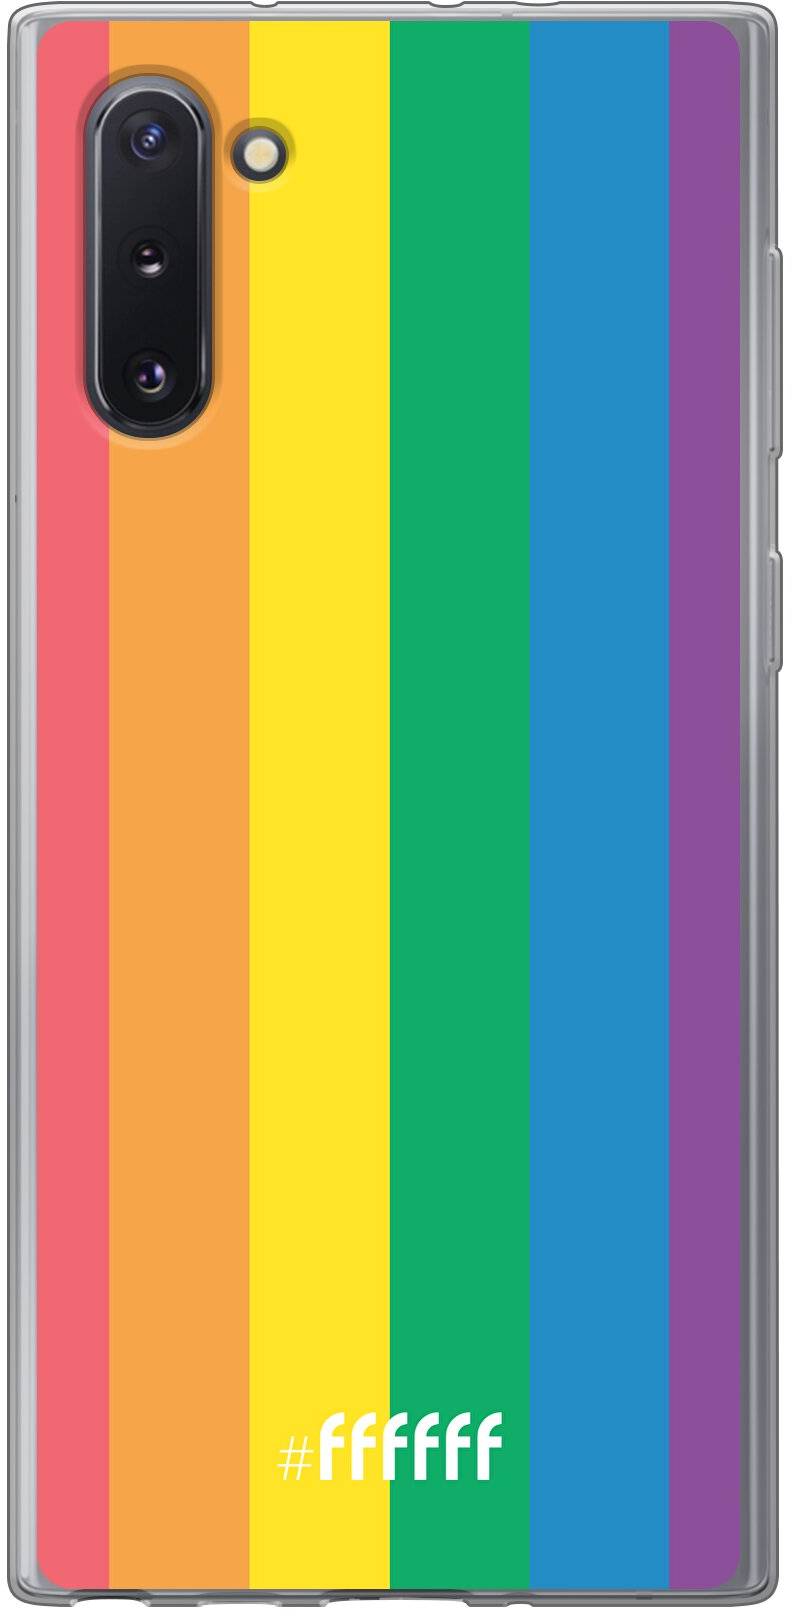 #LGBT Galaxy Note 10